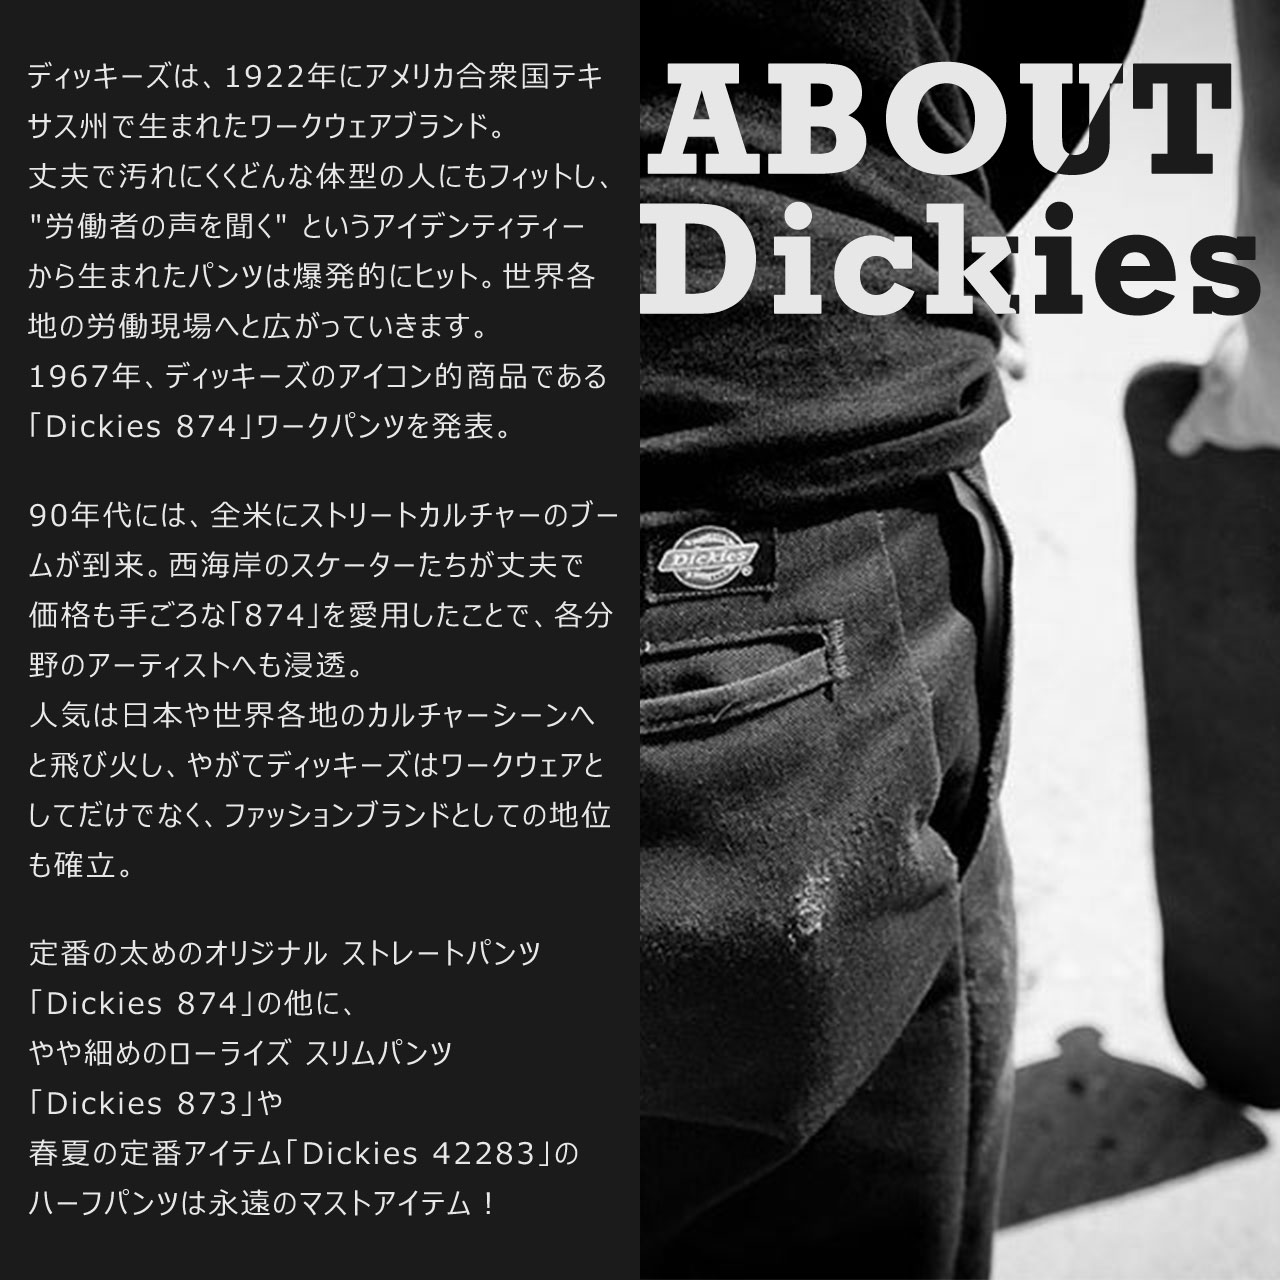  Dickies 42283 шорты колено внизу USA модель Dickies рабочие брюки брюки 